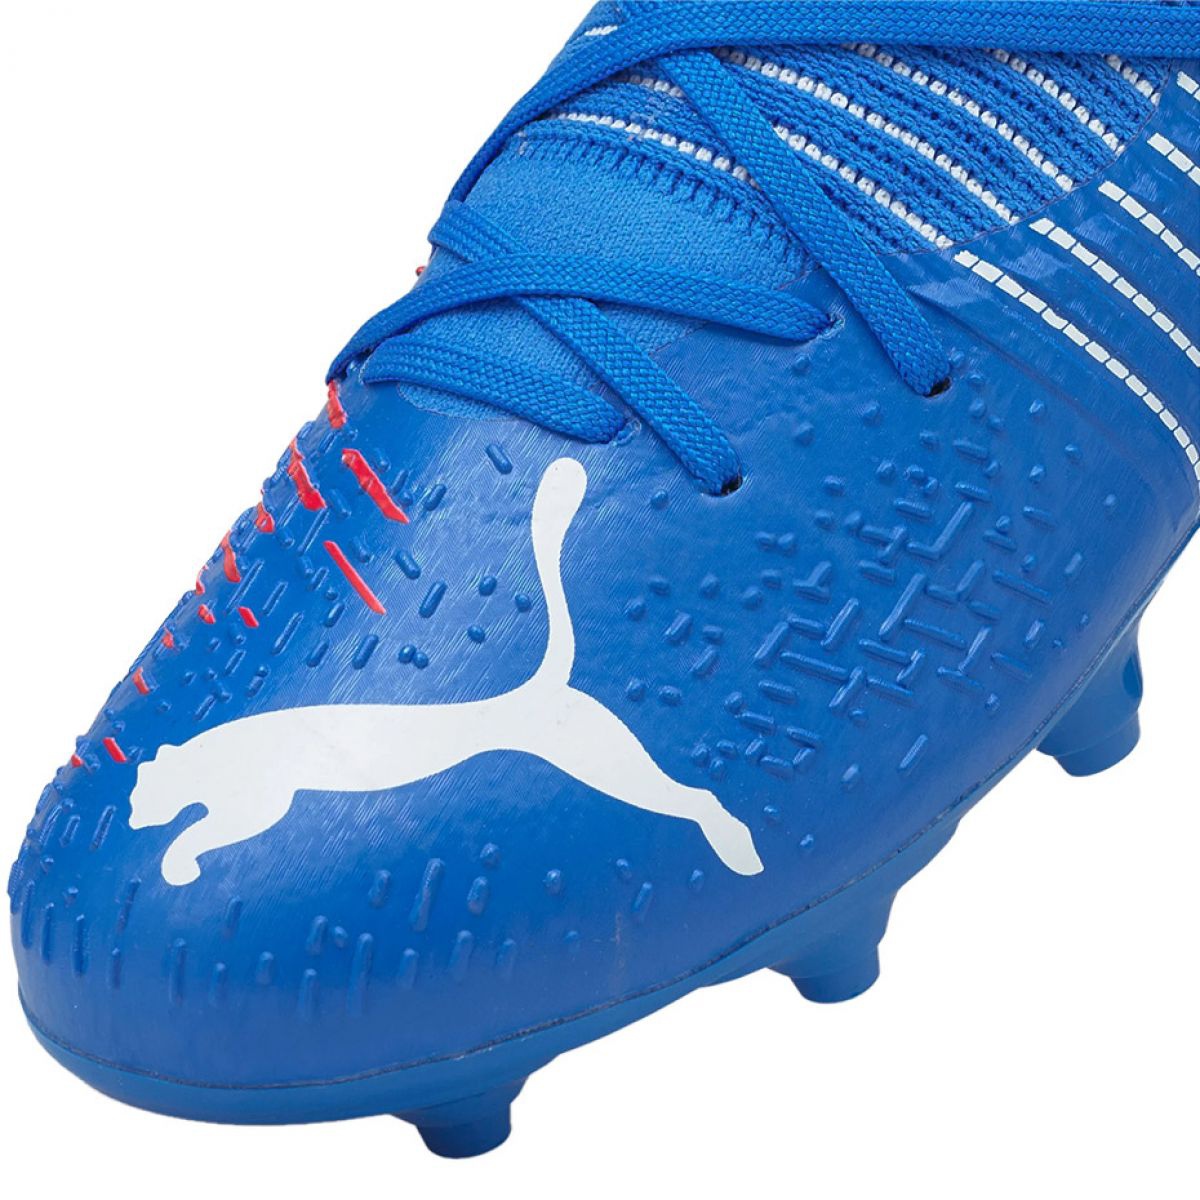 puma football shoes blue